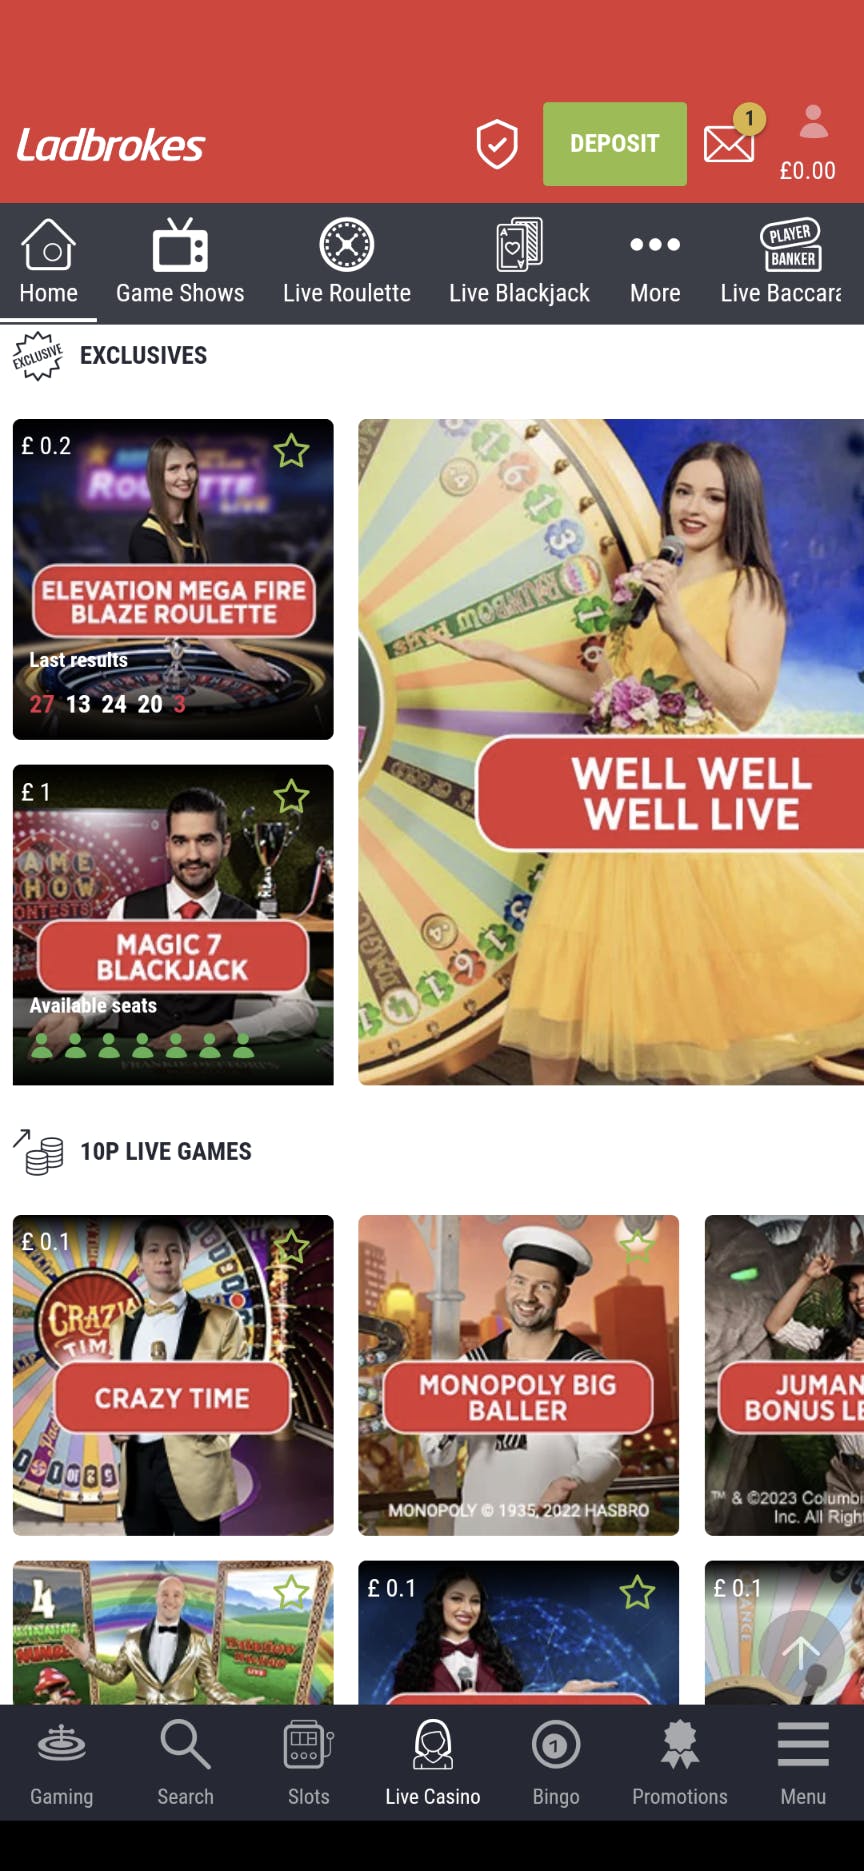 Ladbrokes live casino app